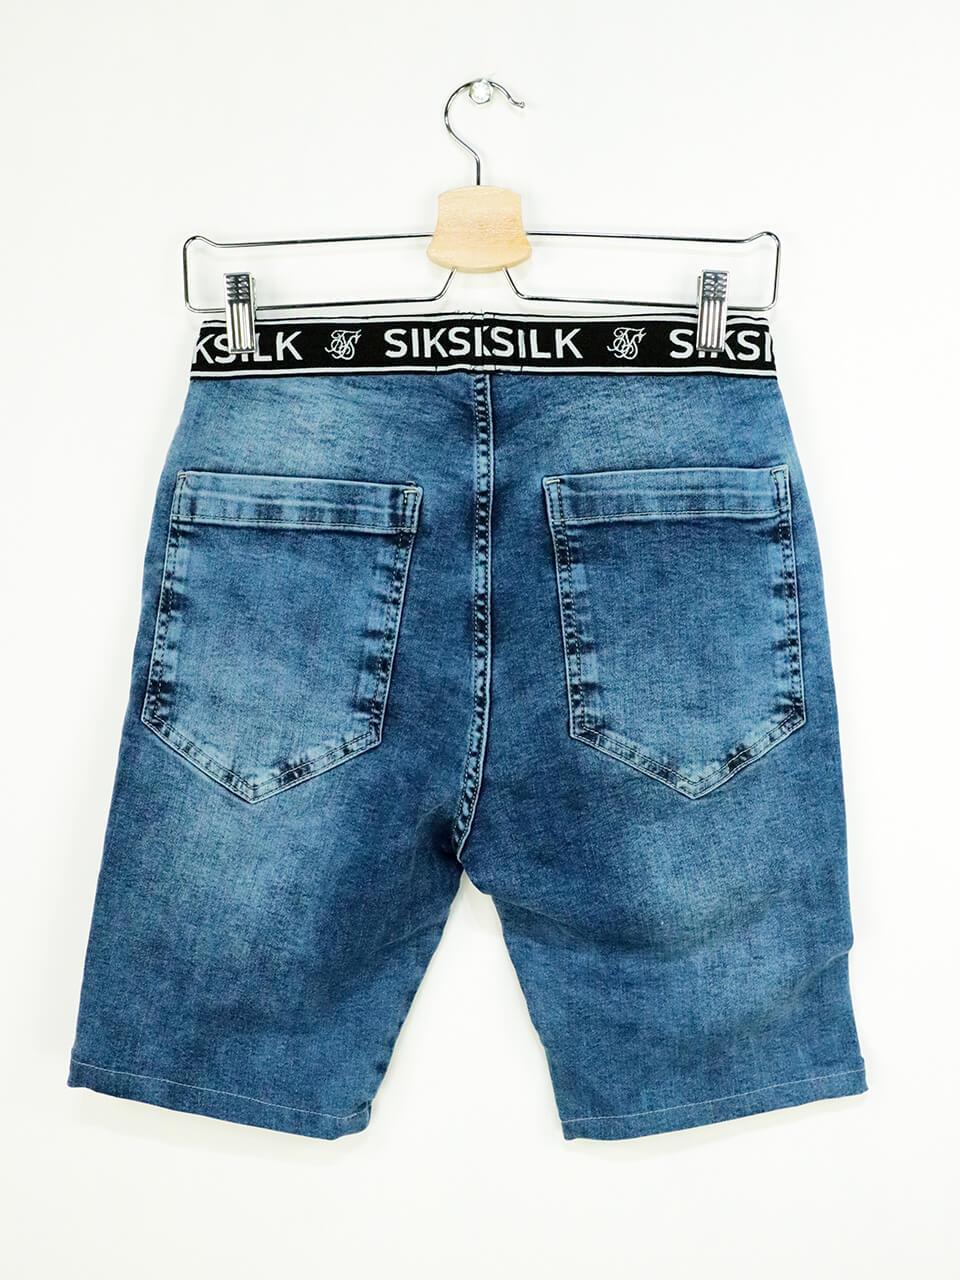 SikSilk Elastic Men's Denim Shorts Blue - STREET MODE ™